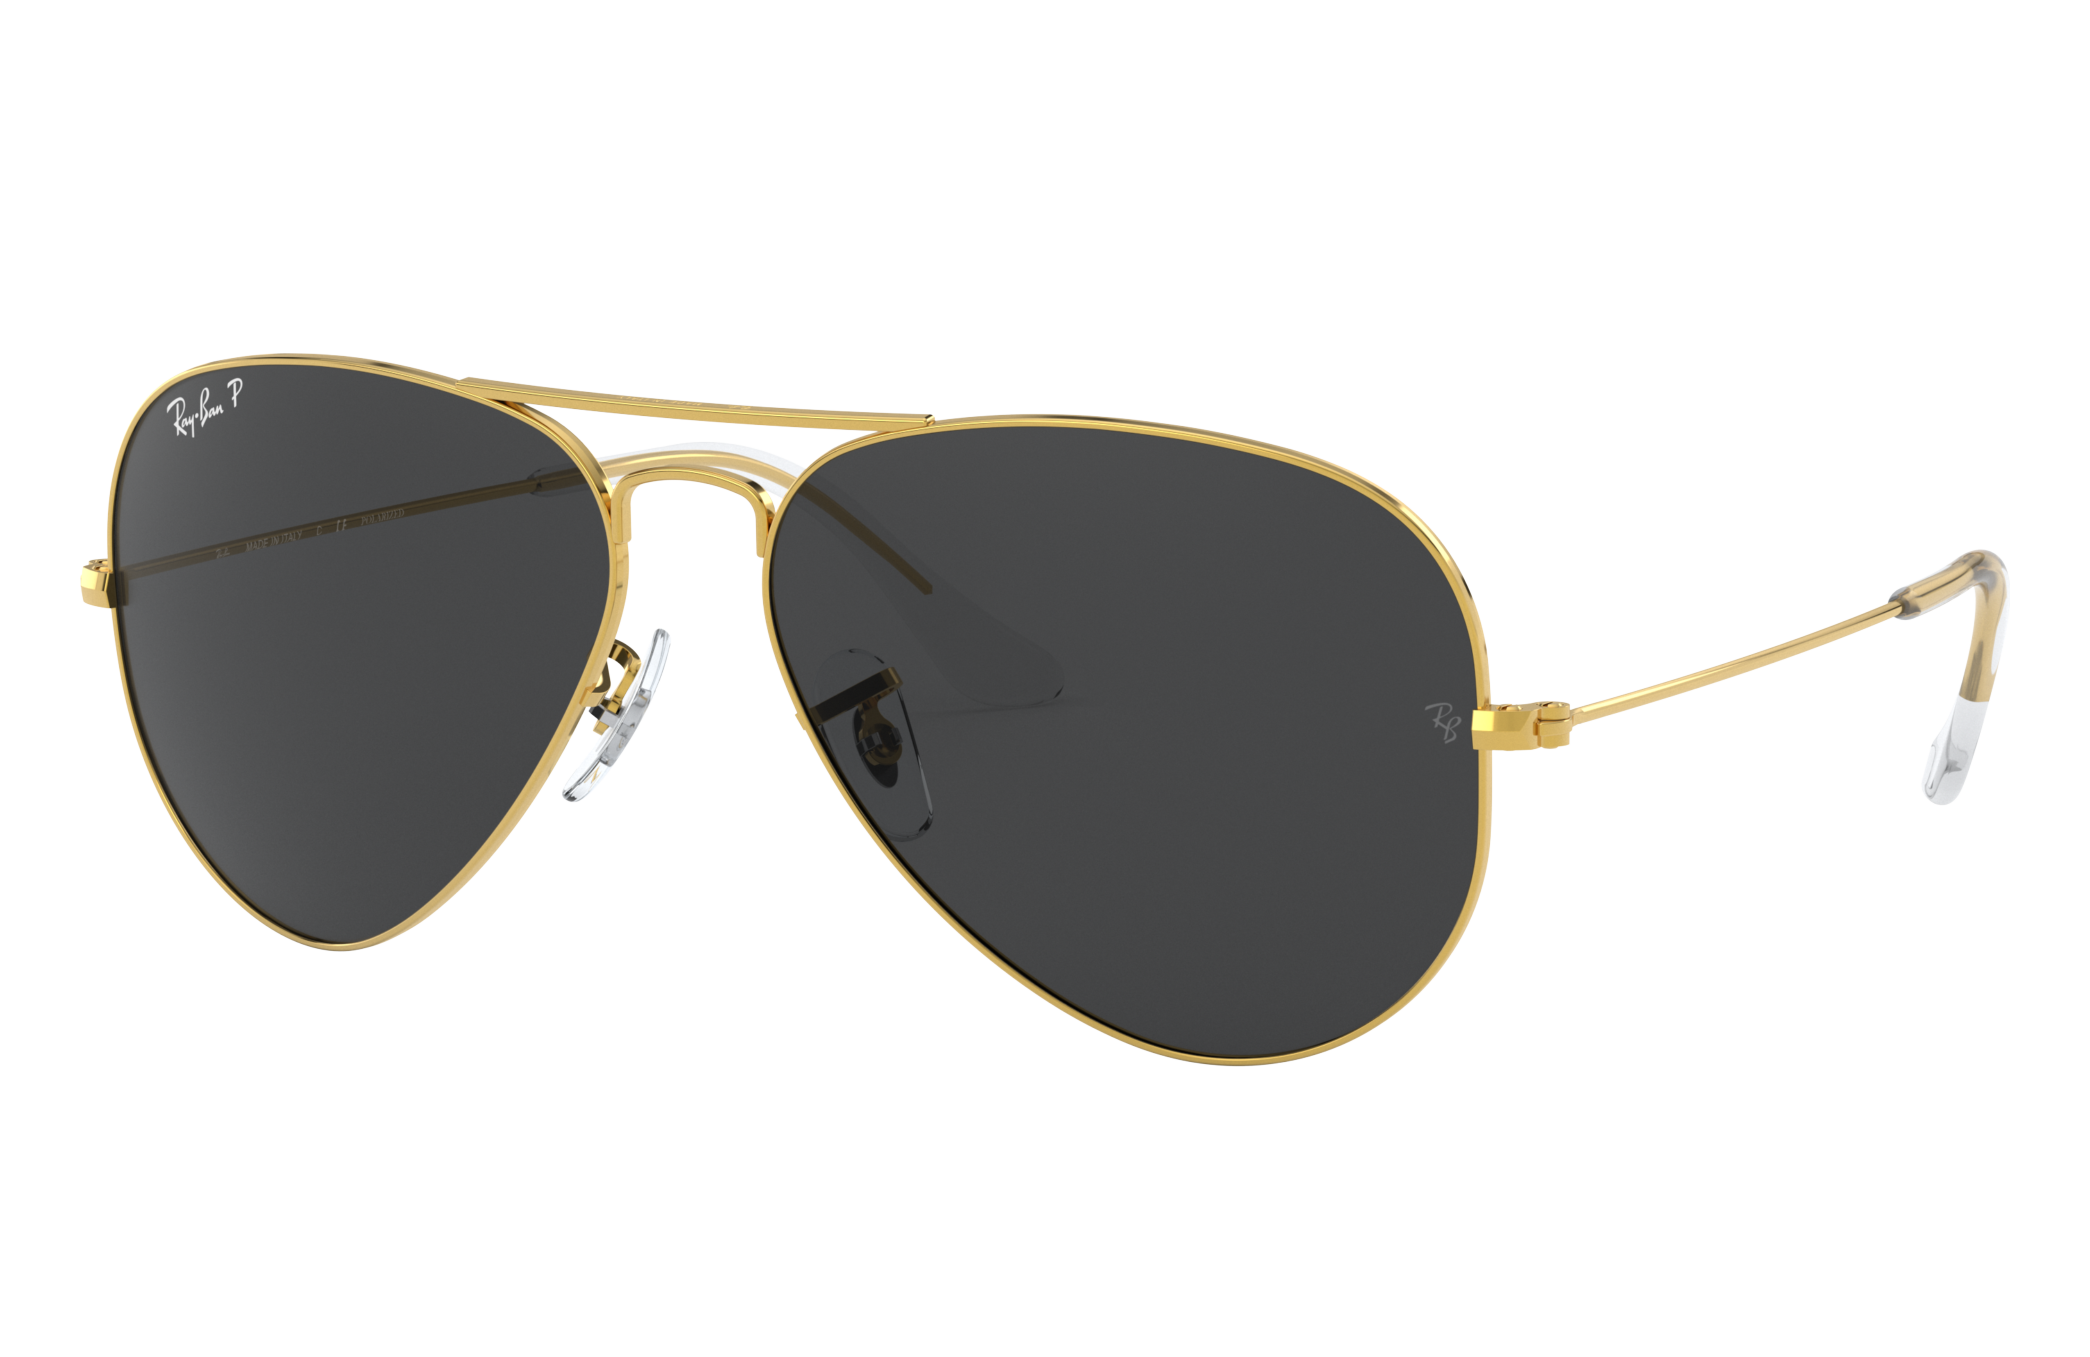 Sunglasses - Designer Sunglasses for Women | FREIDA ROTHMAN